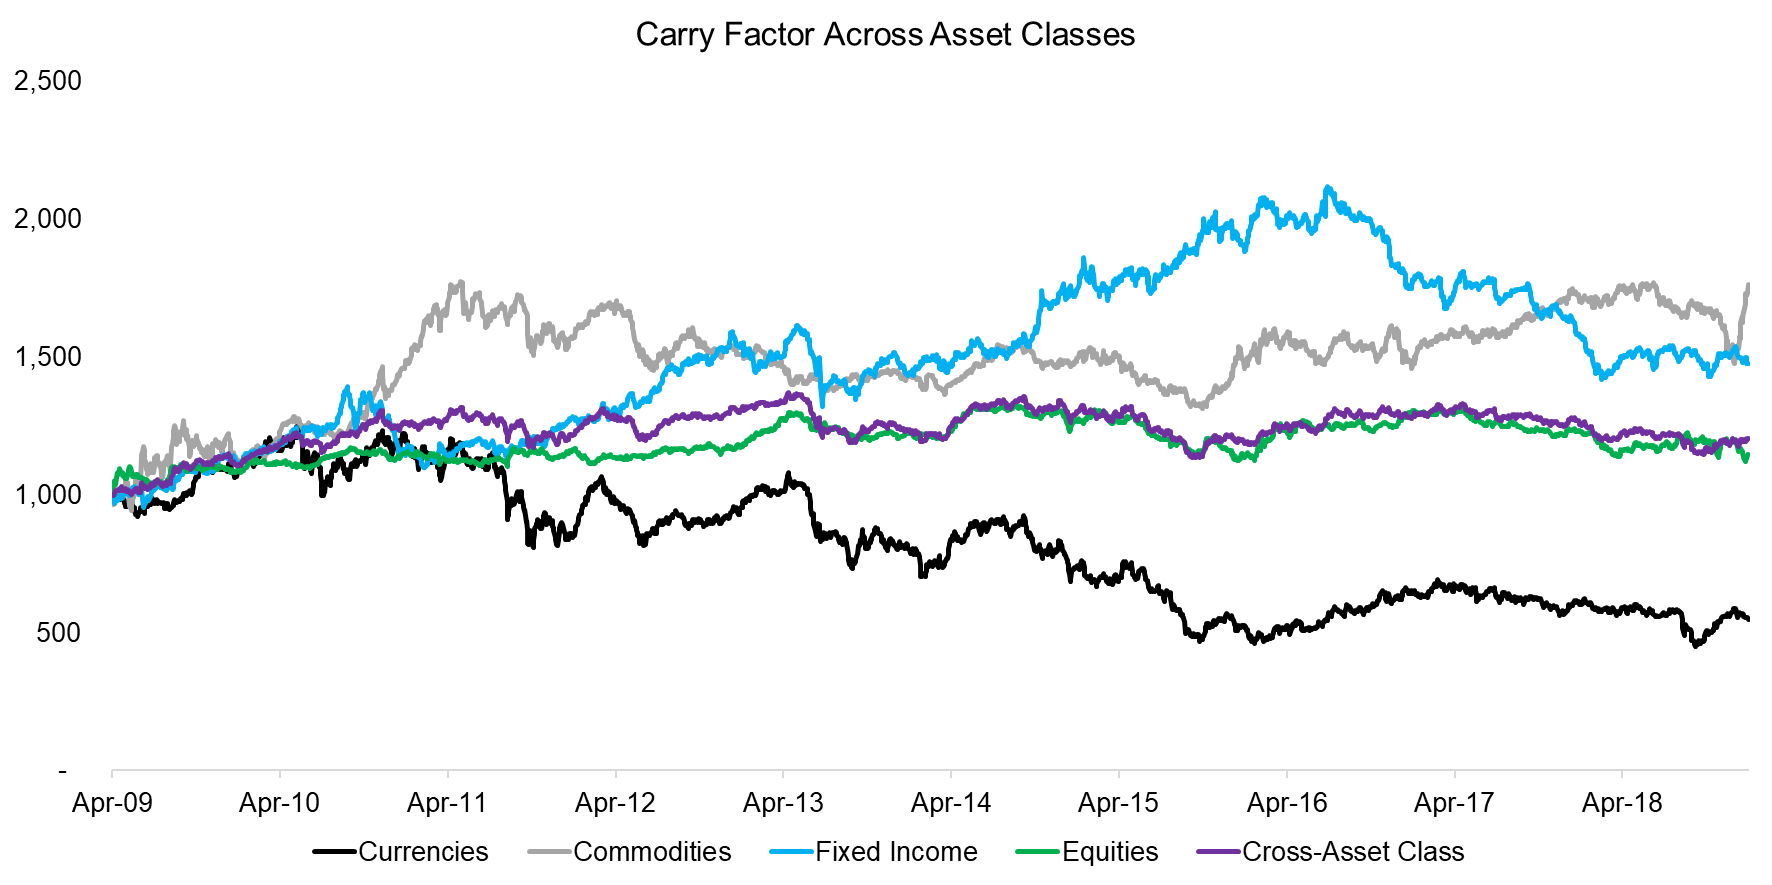 Carry Factor Across Asset Classes